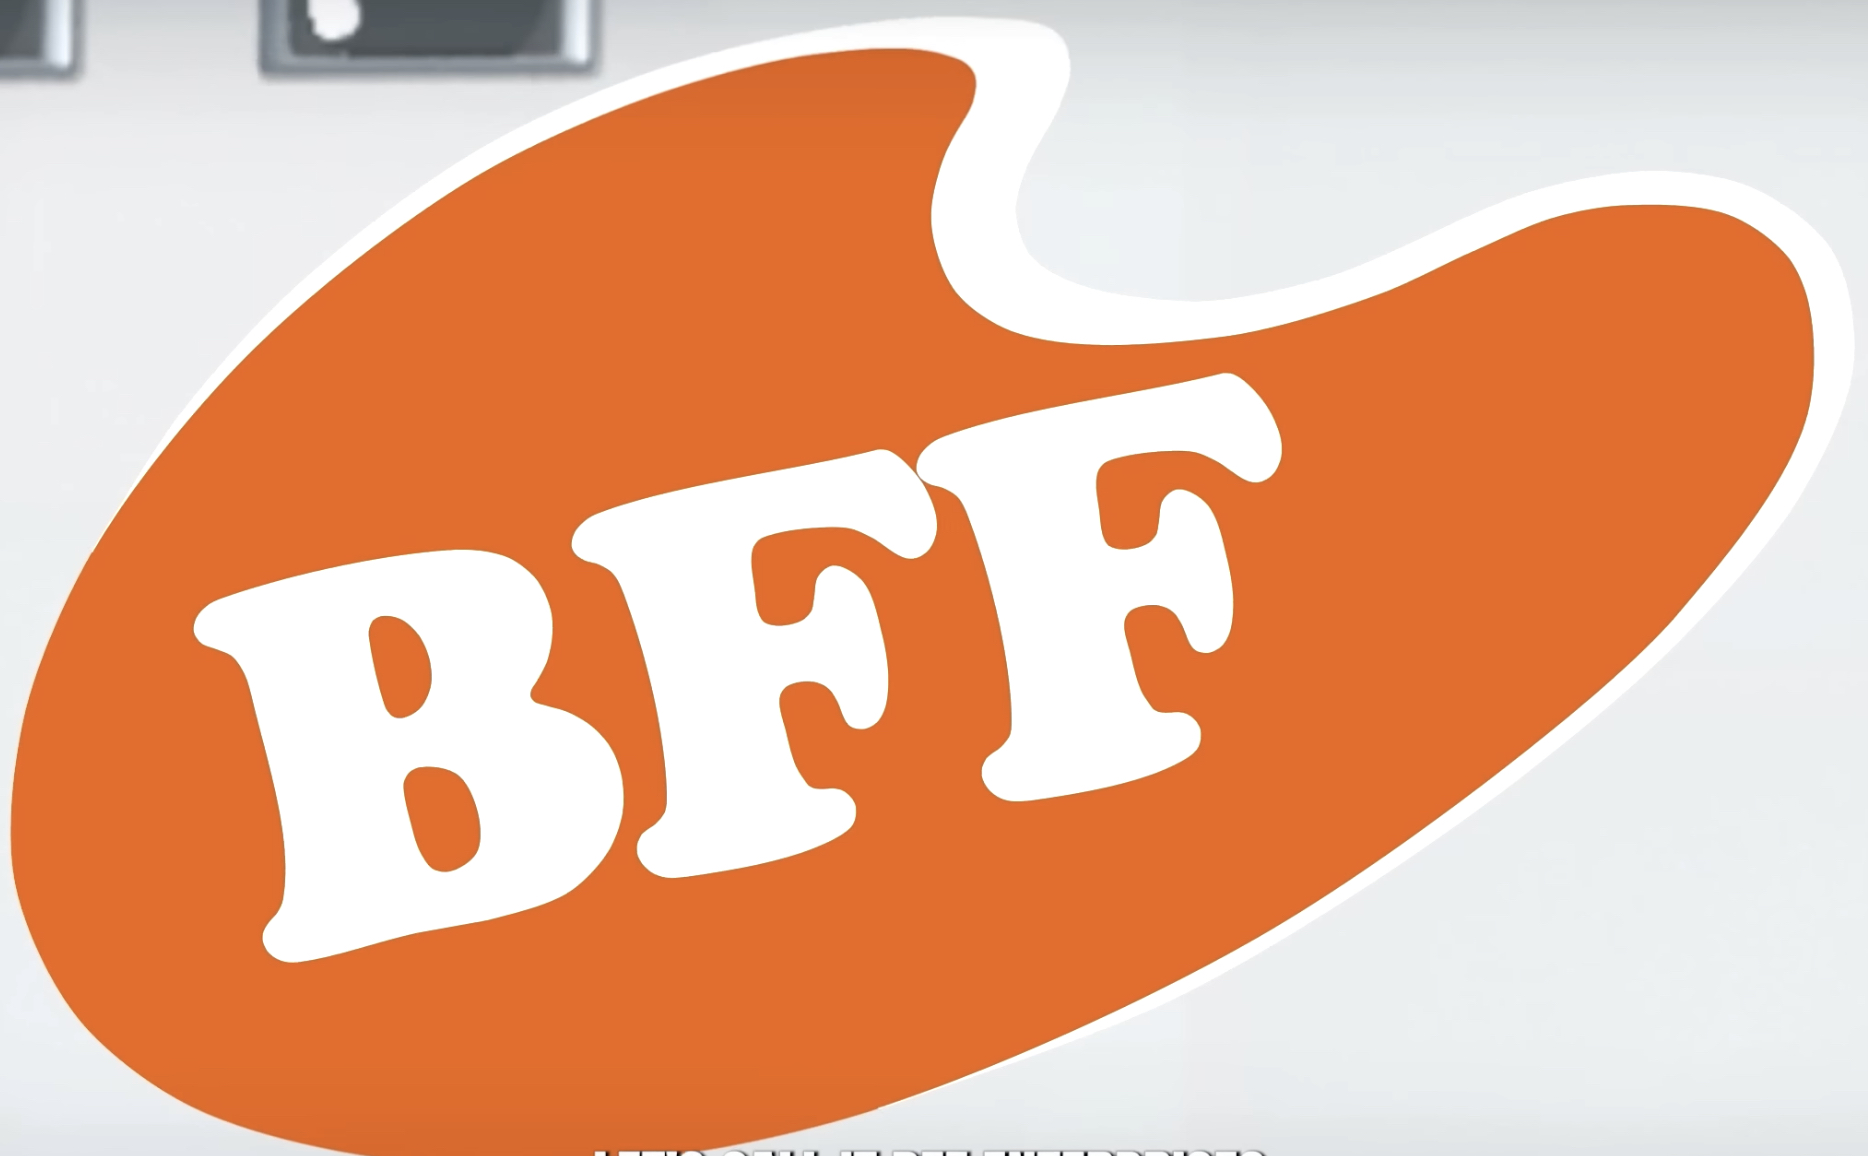 B.F.F Enterprises